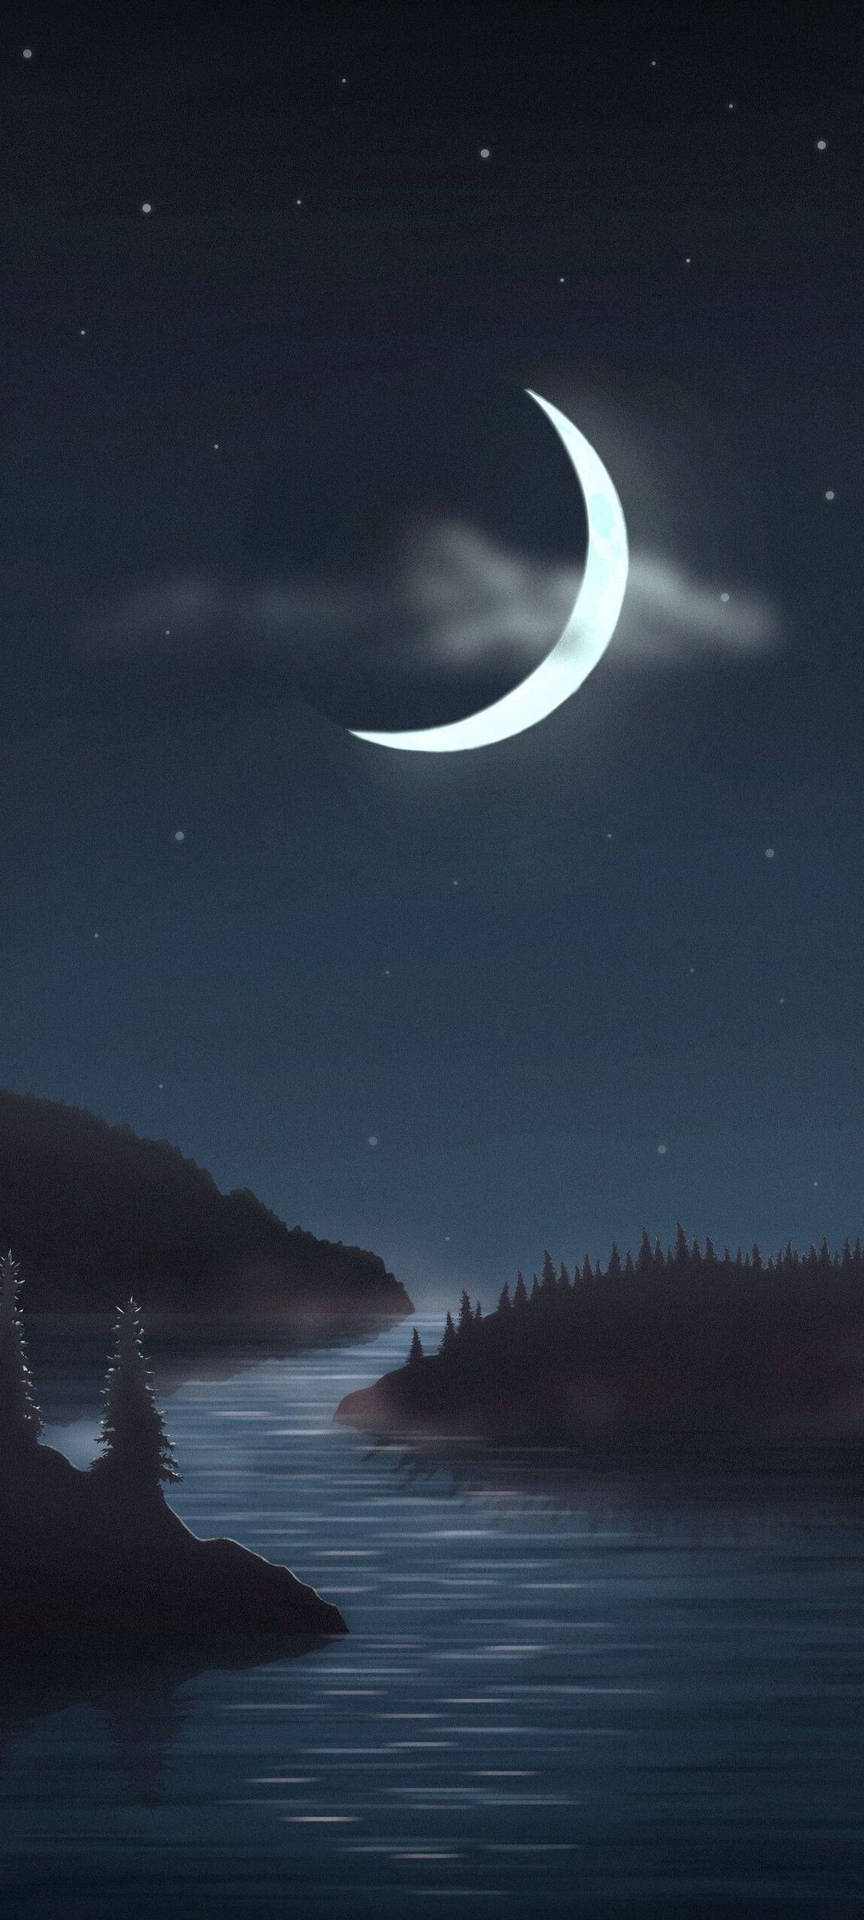 Dark Night Sky And Crescent Moon Background